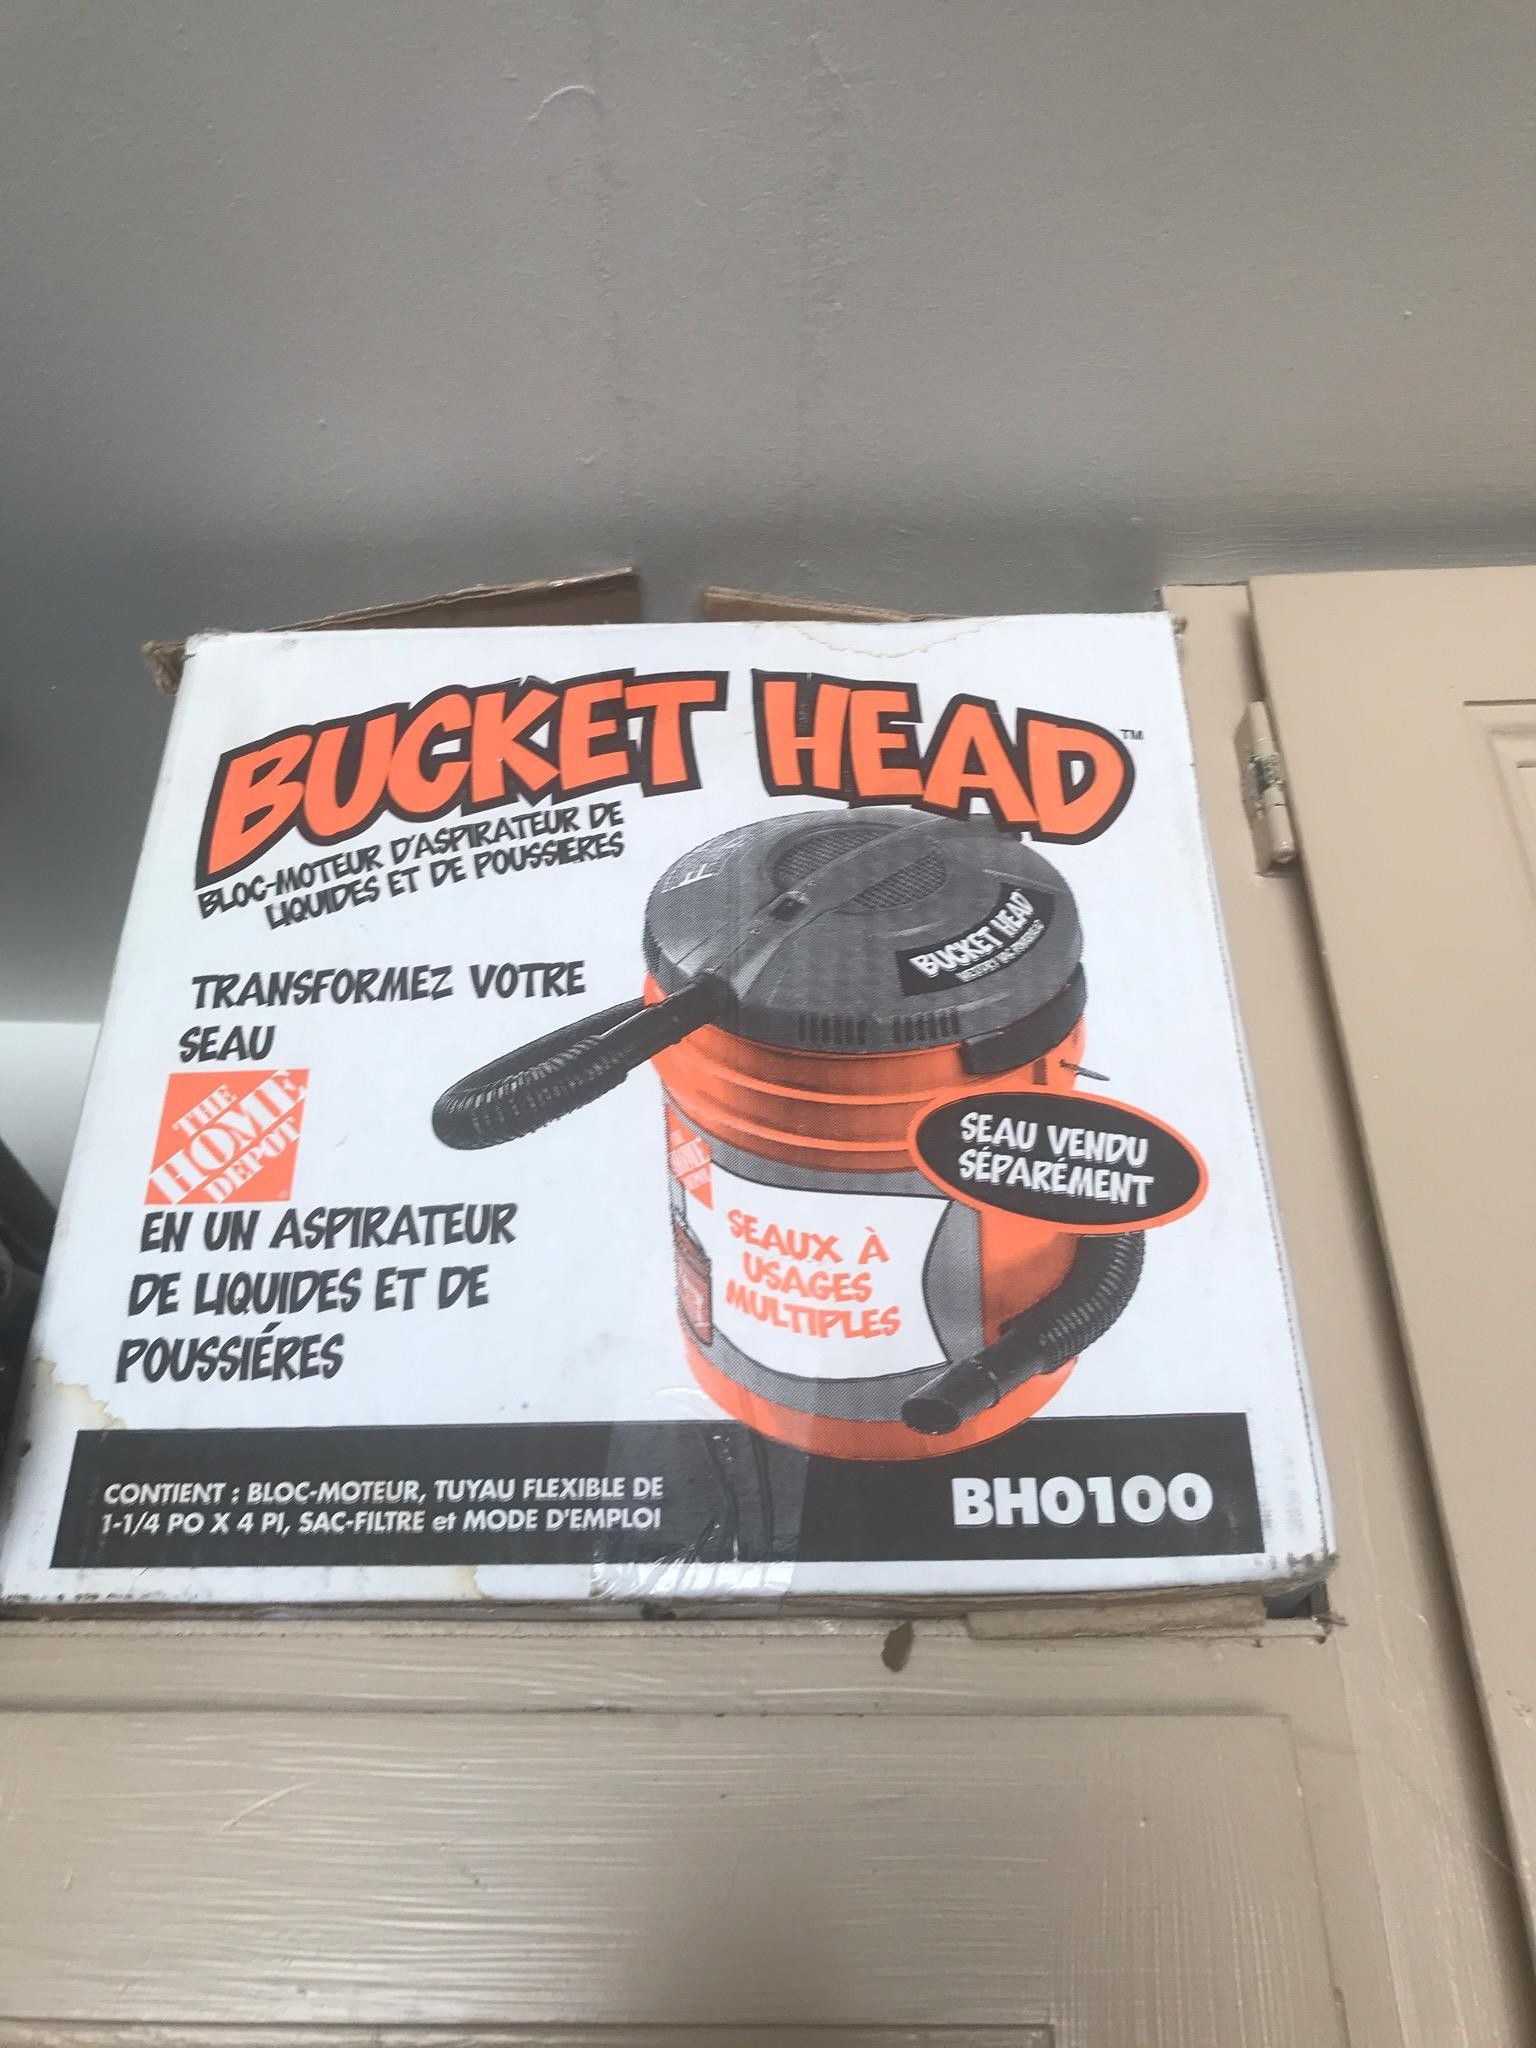 Bucket head vacuum